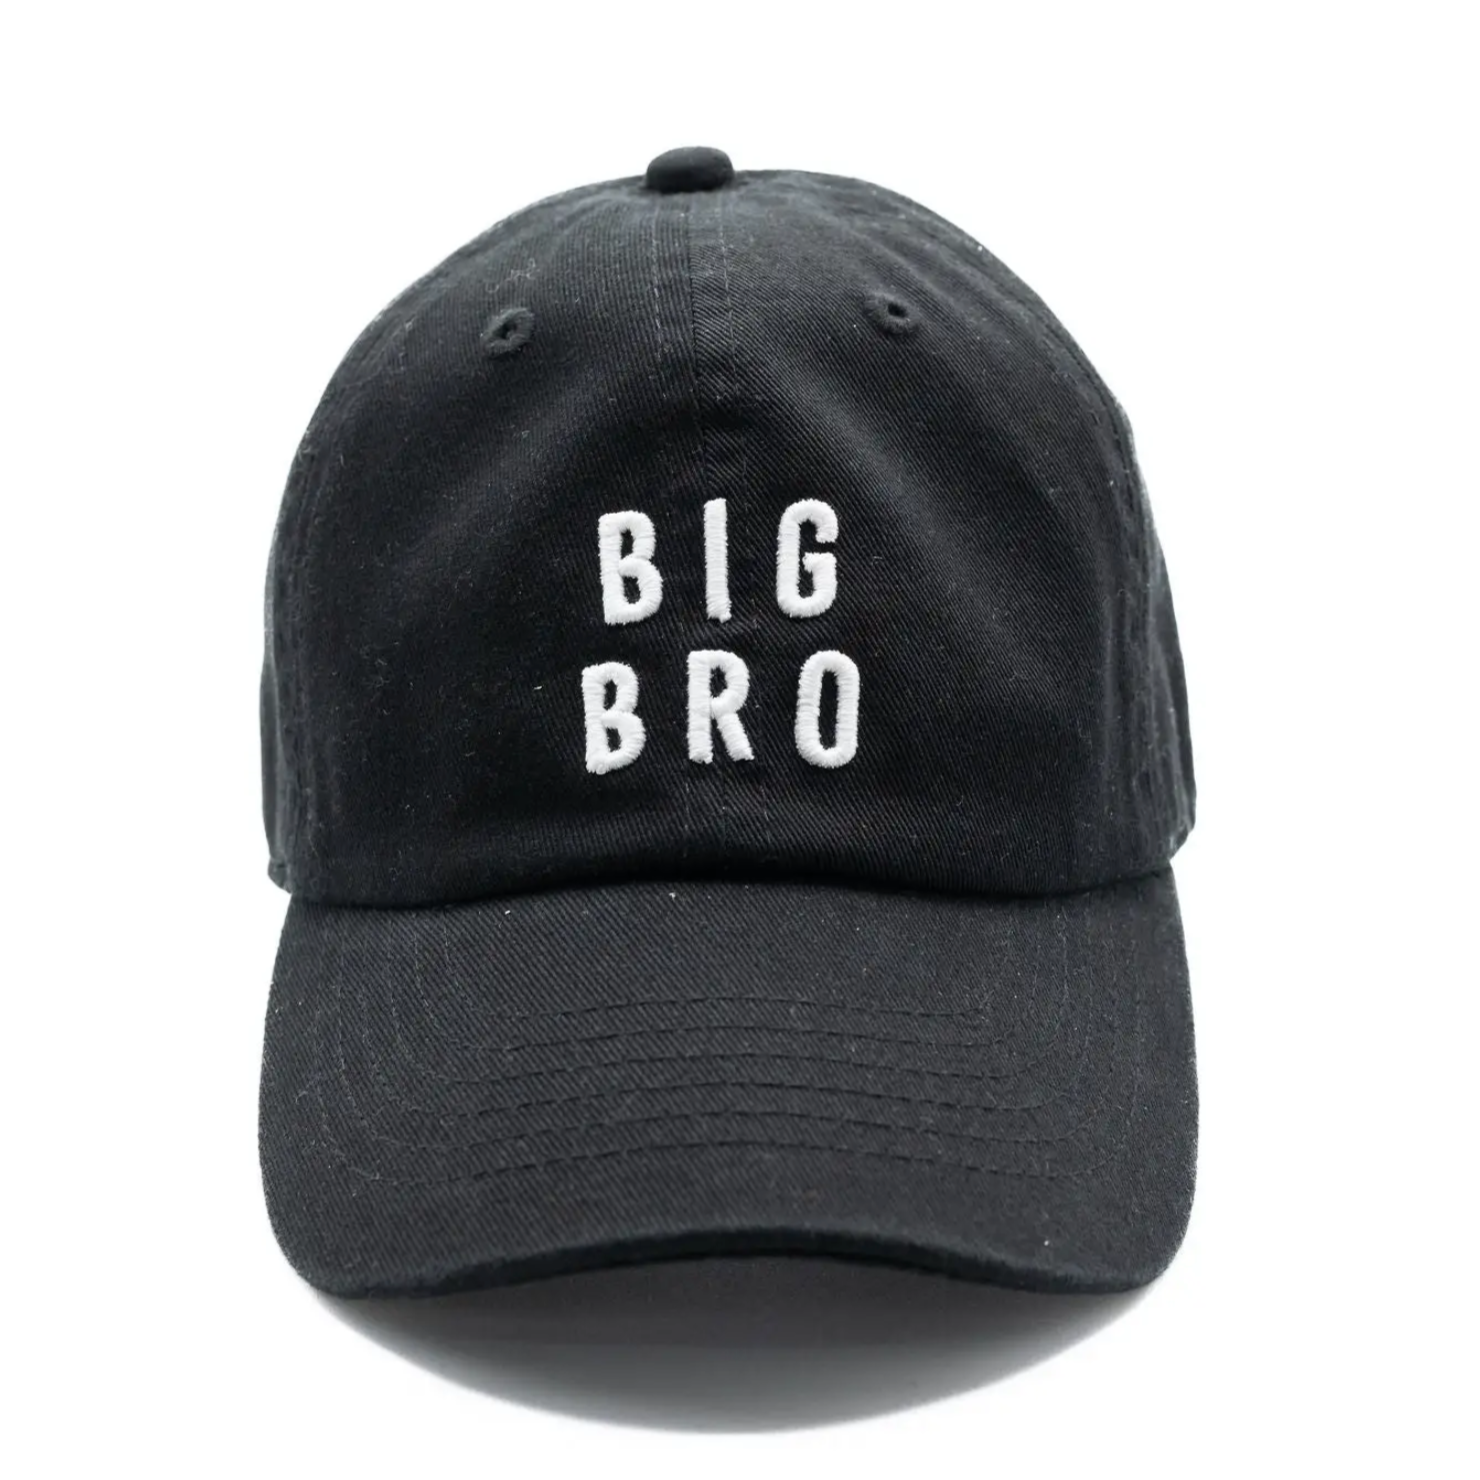 big bro hat in black